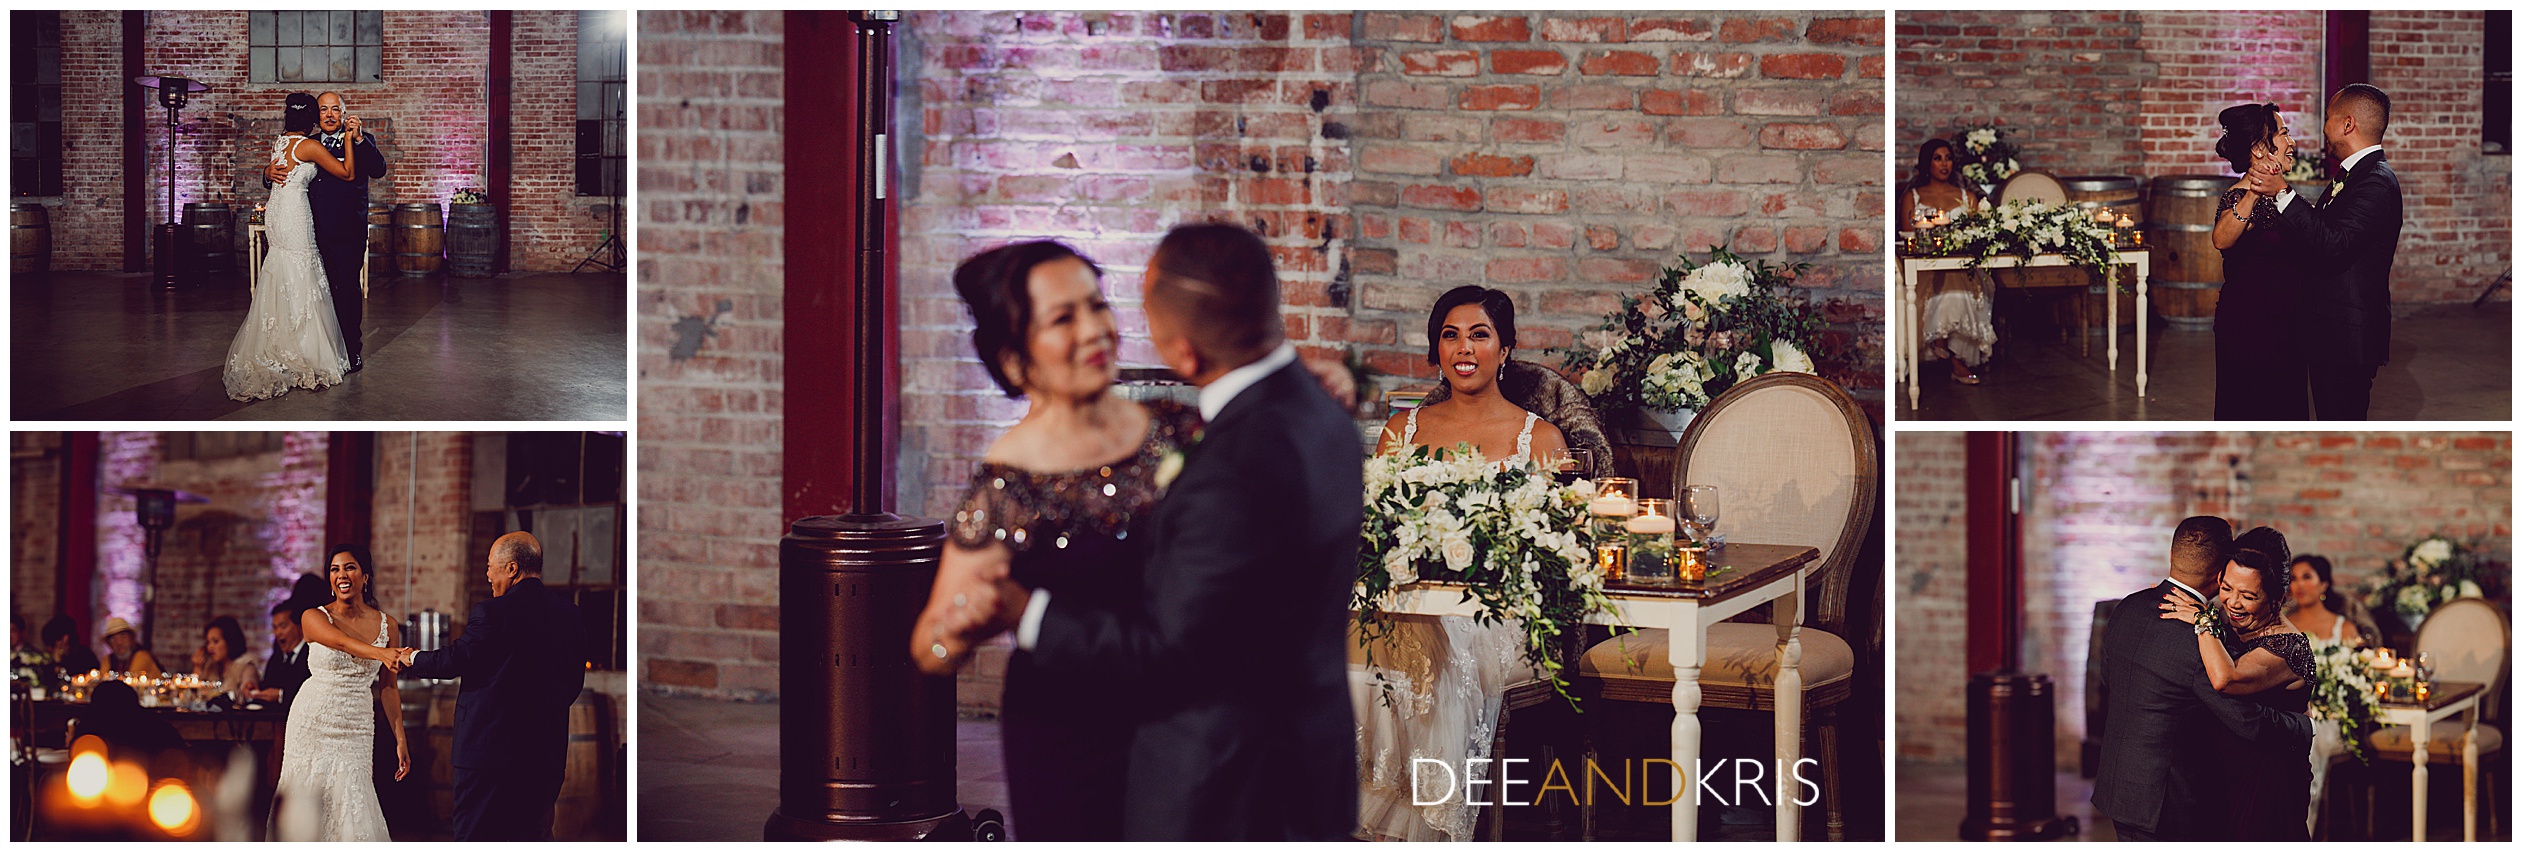 Sacramento Wedding photographer photographs Old Sugar Mill Reception, first dance